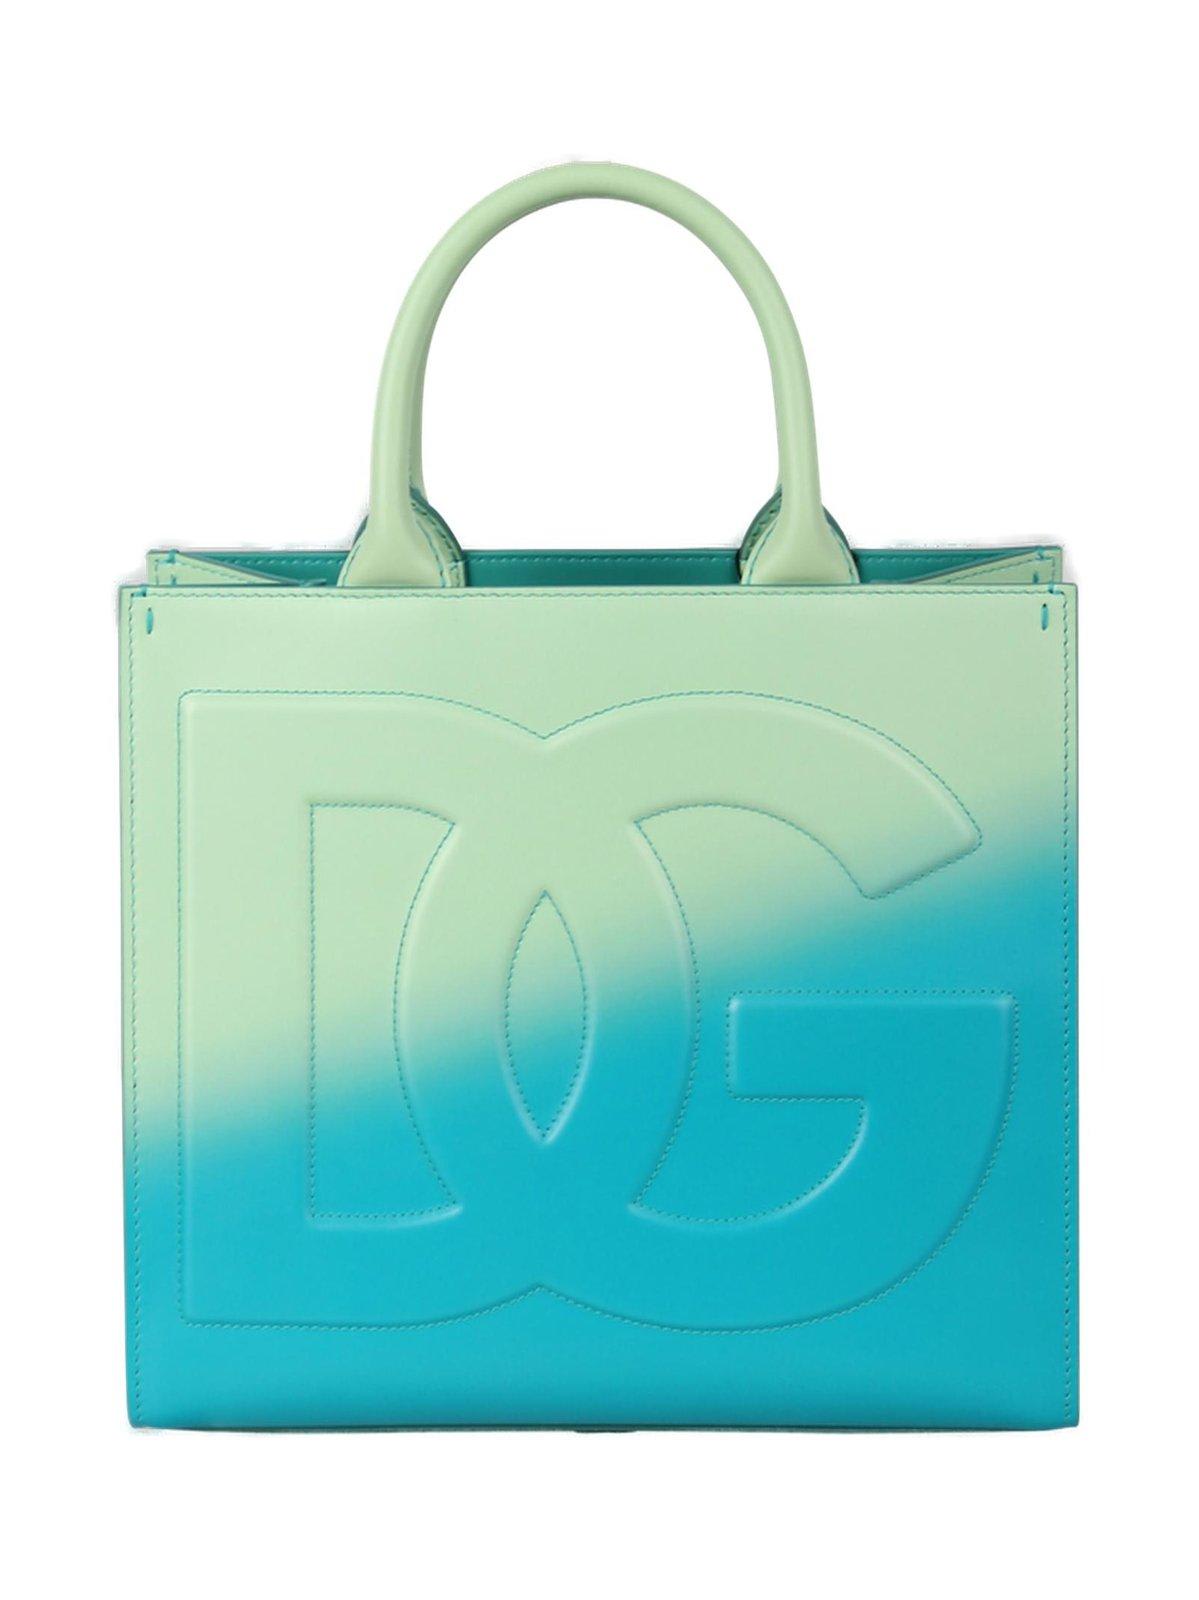 Dolce & Gabbana Dg Logo Embossed Tote Bag In Blue/green